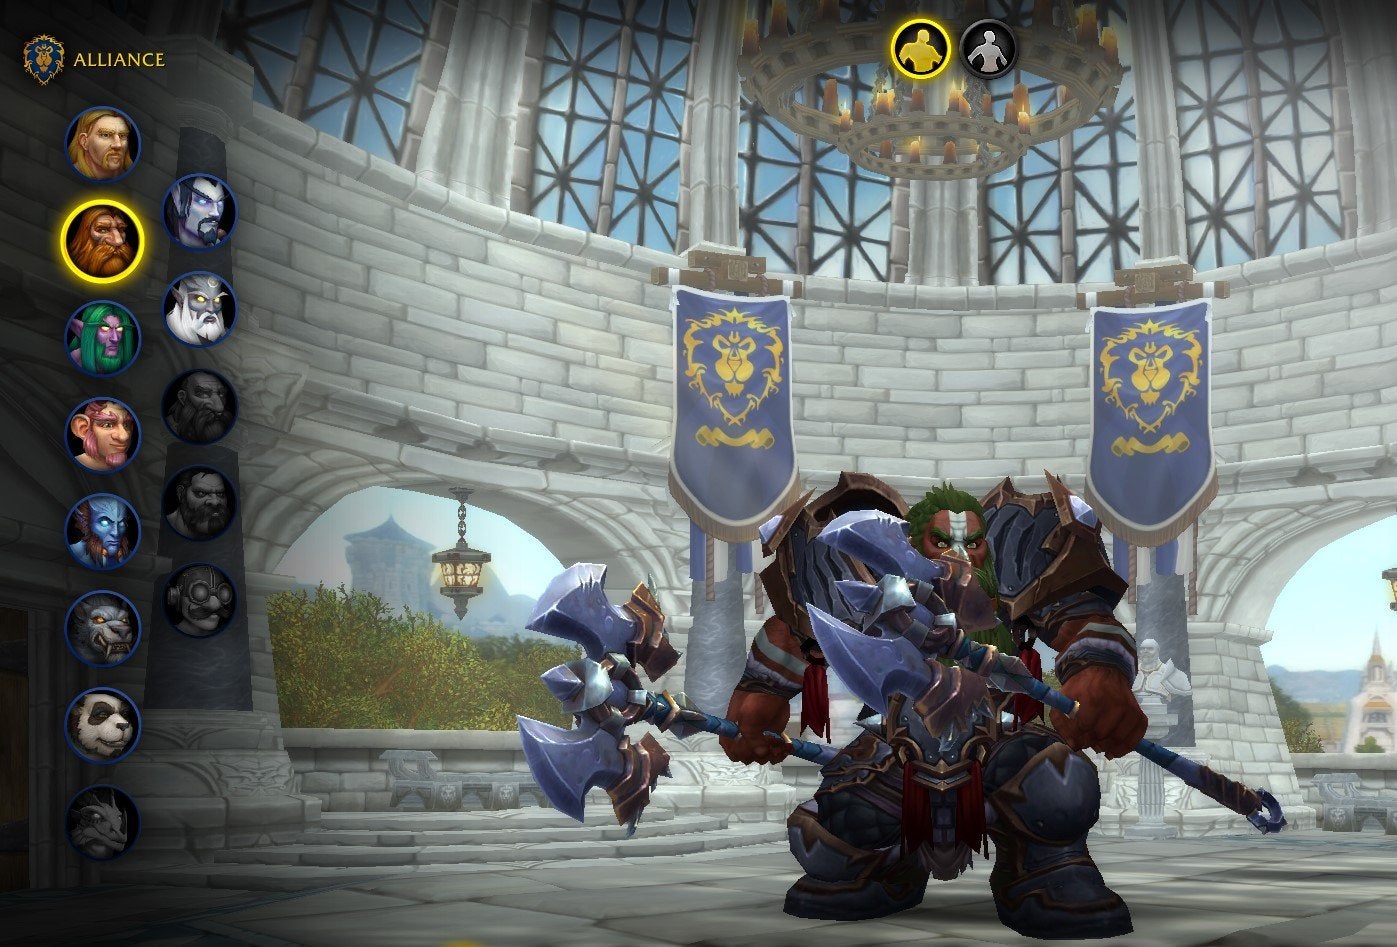 A Dwarf in World of Warcraft.